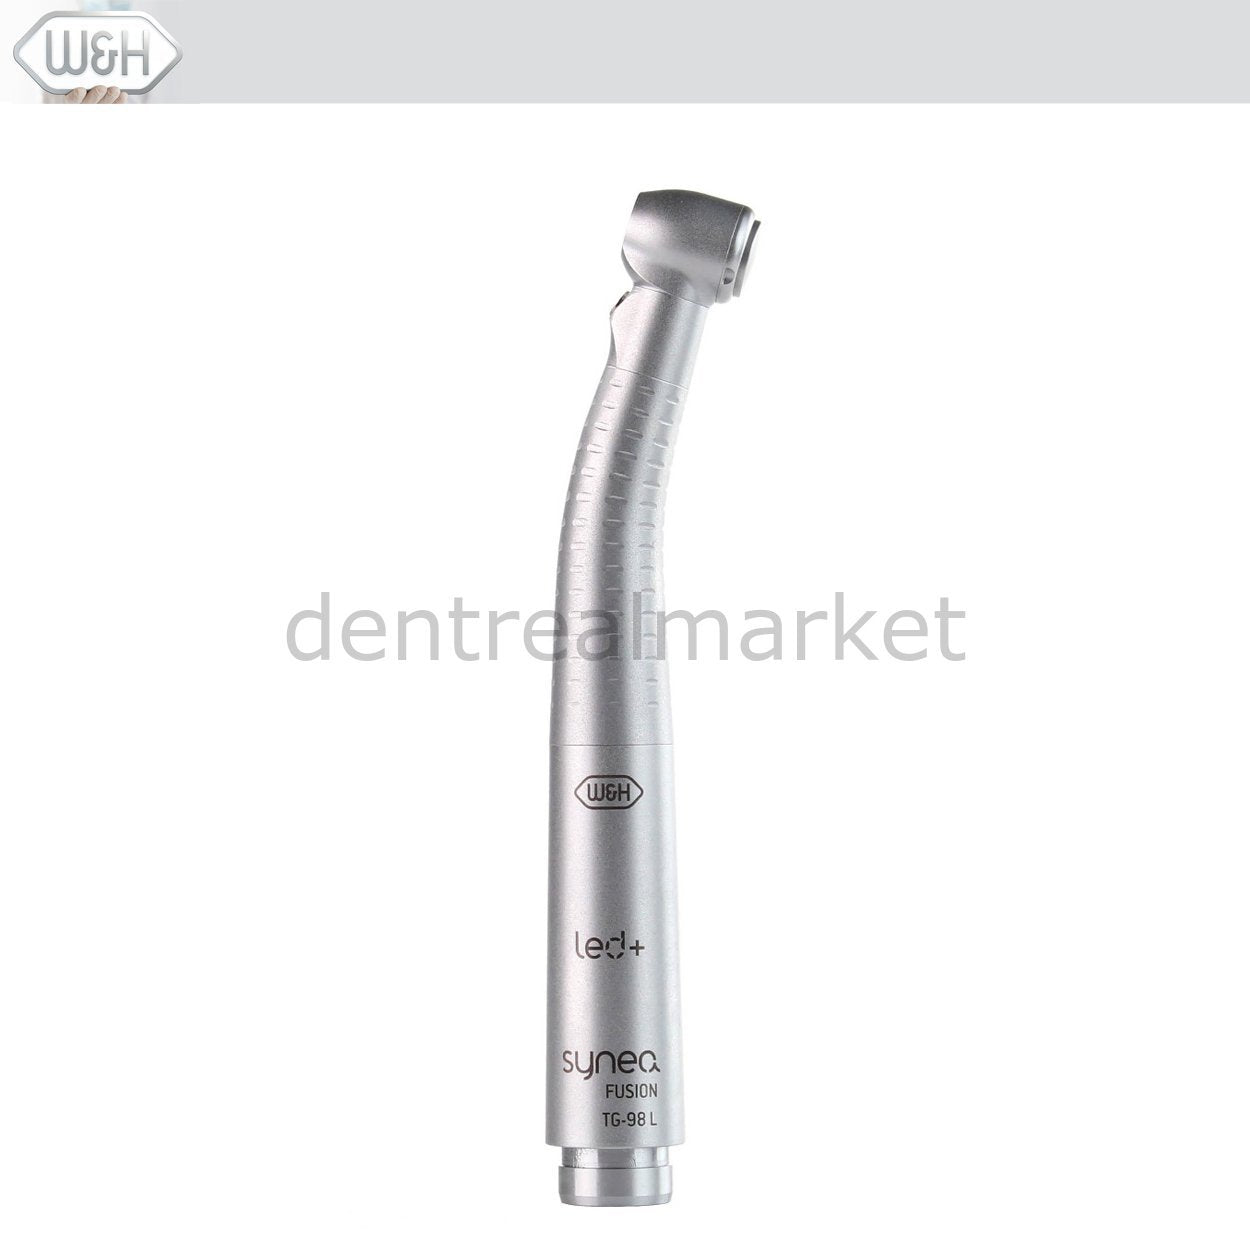 DentrealStore - W&H Dental Synea Fusion Turbine with Led Light - TG-98 L